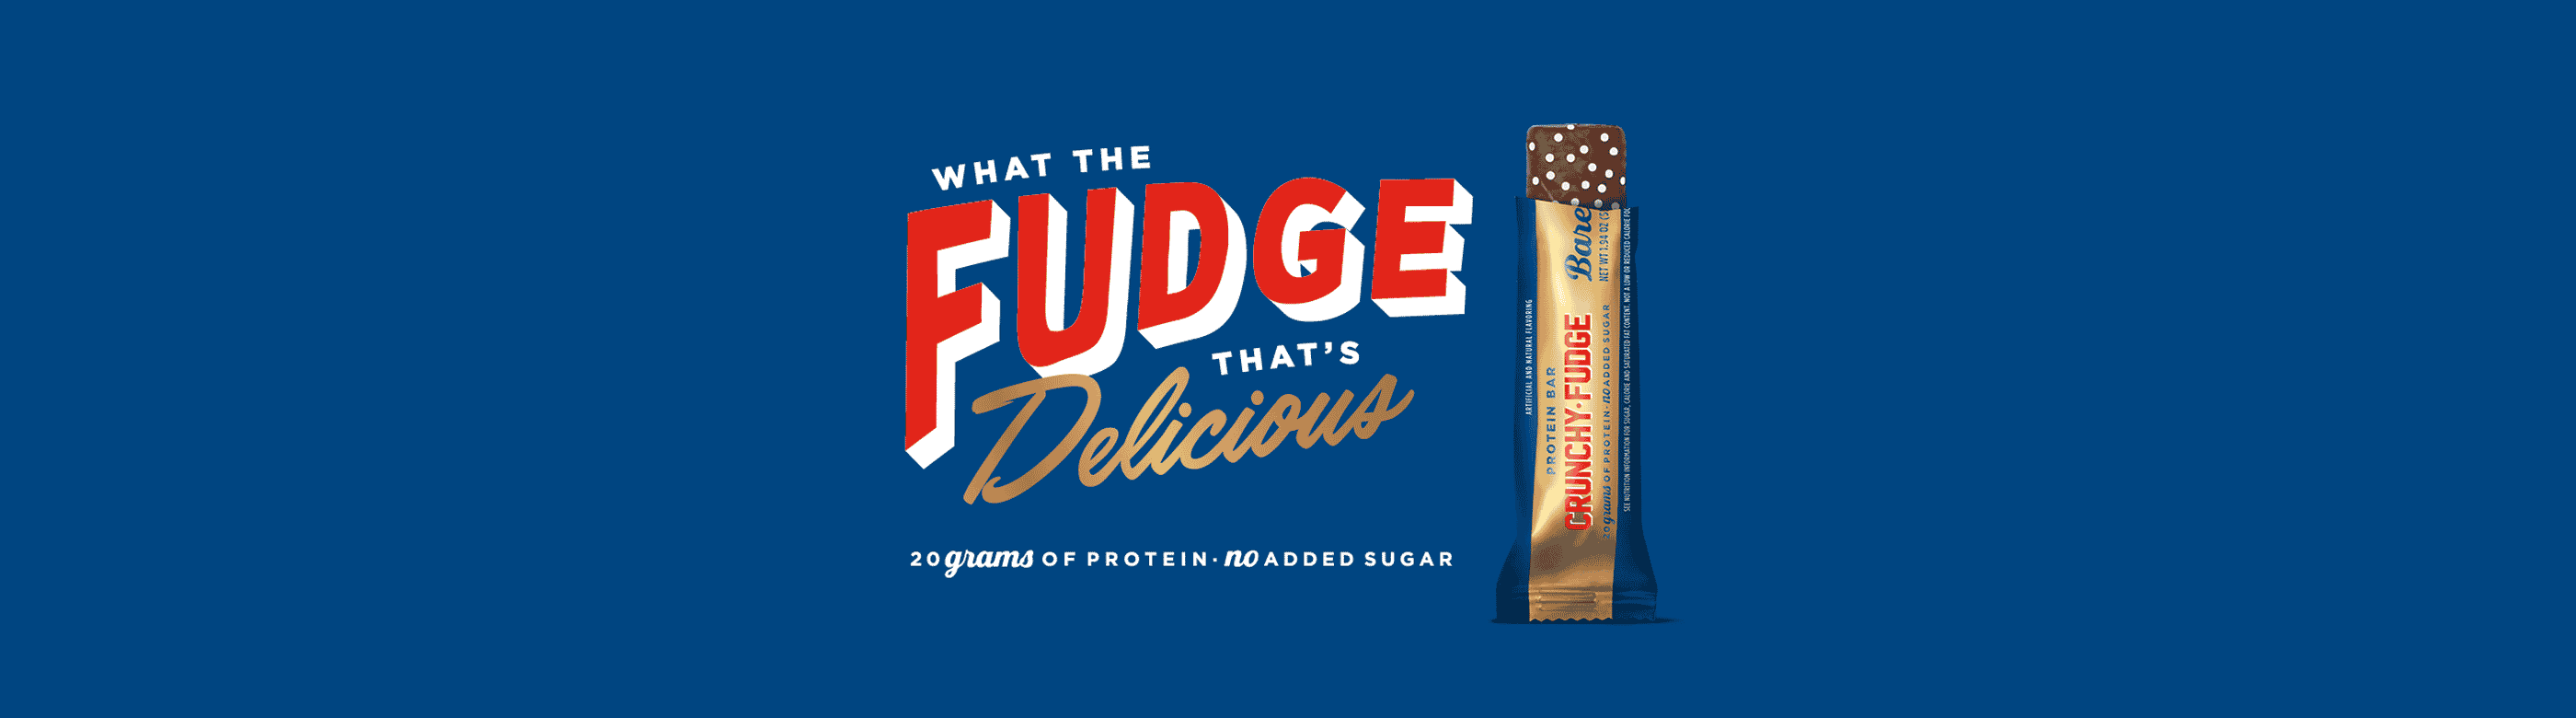 What the Fudge?